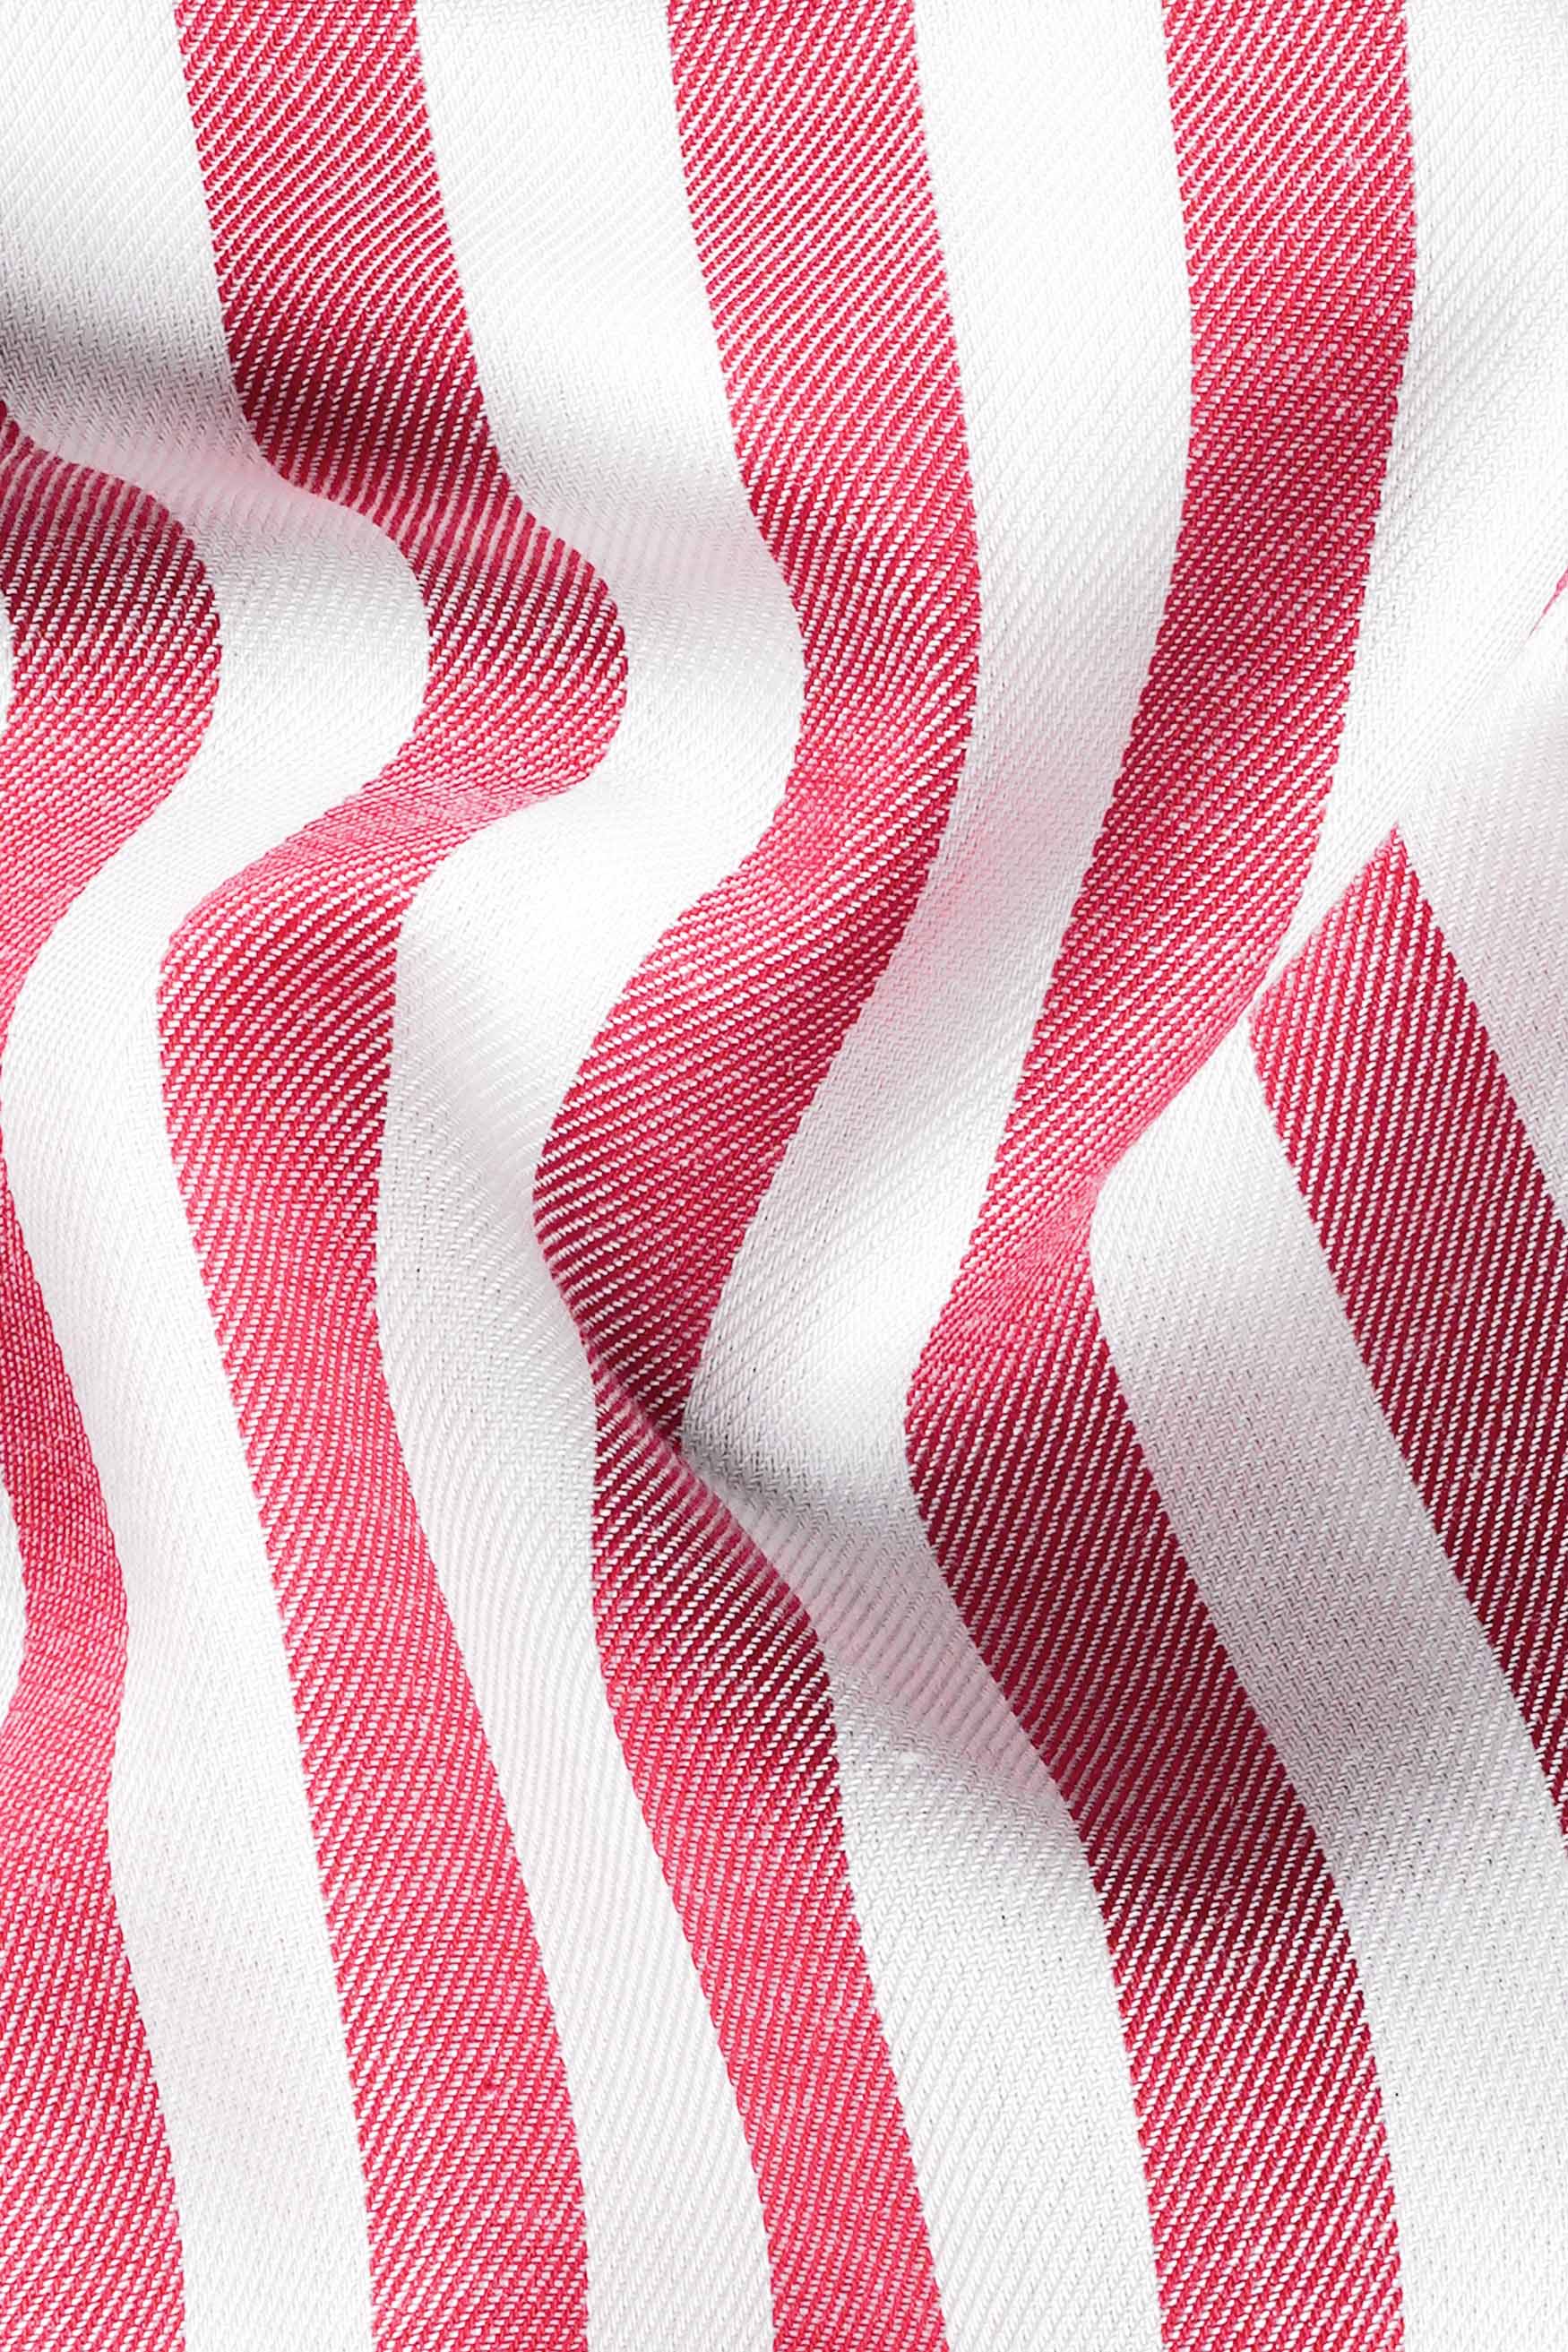 Mandy Pink and White Striped Twill Premium Cotton Button Down Shirt